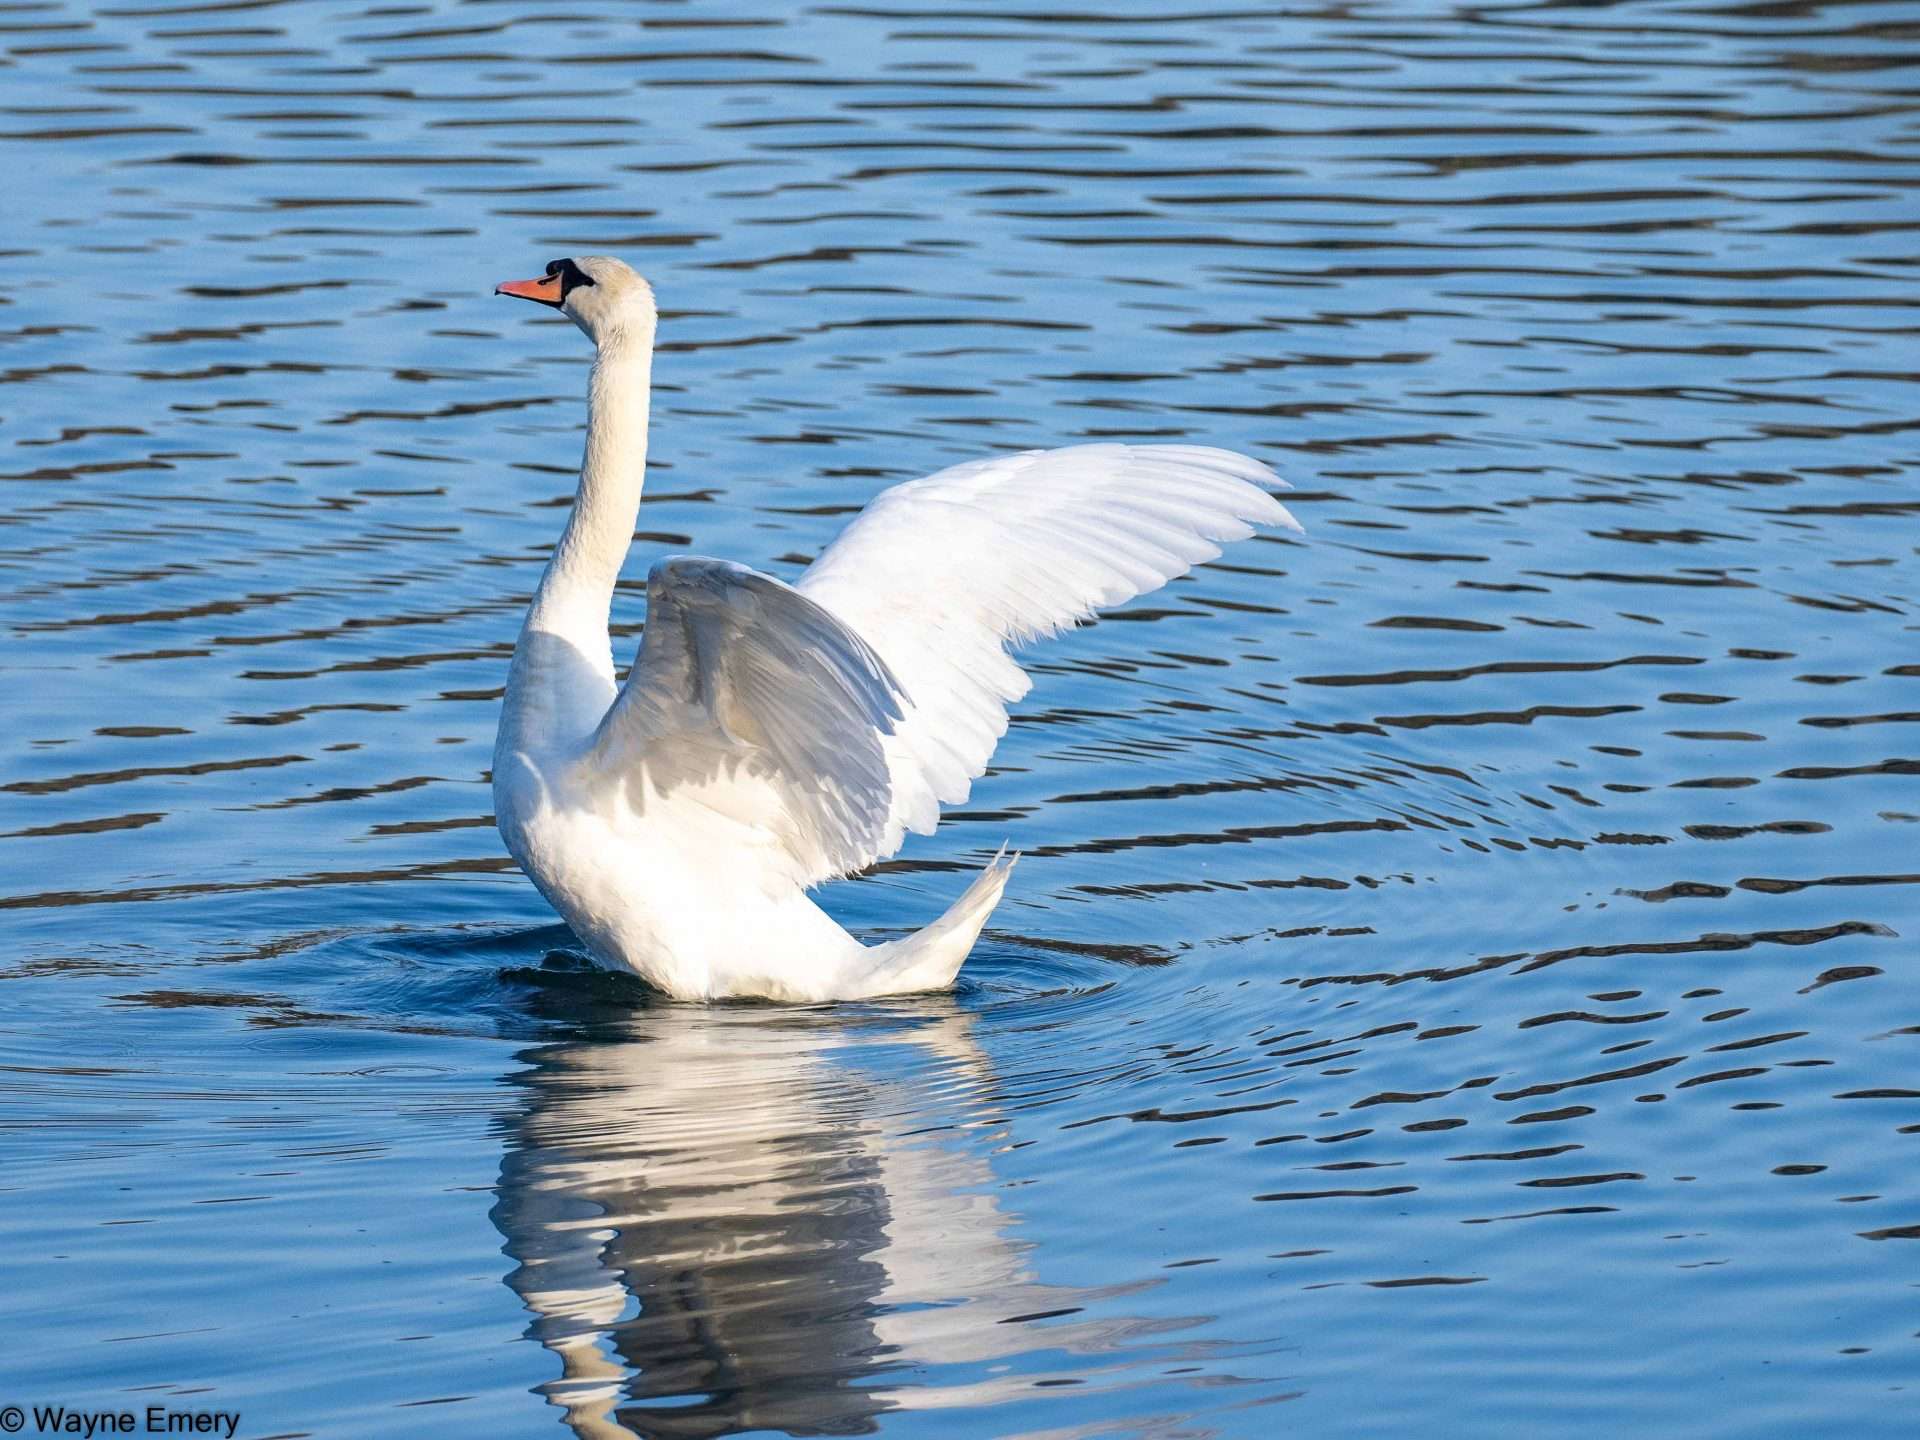 Mute Swan by Wayne Emery at River Plym